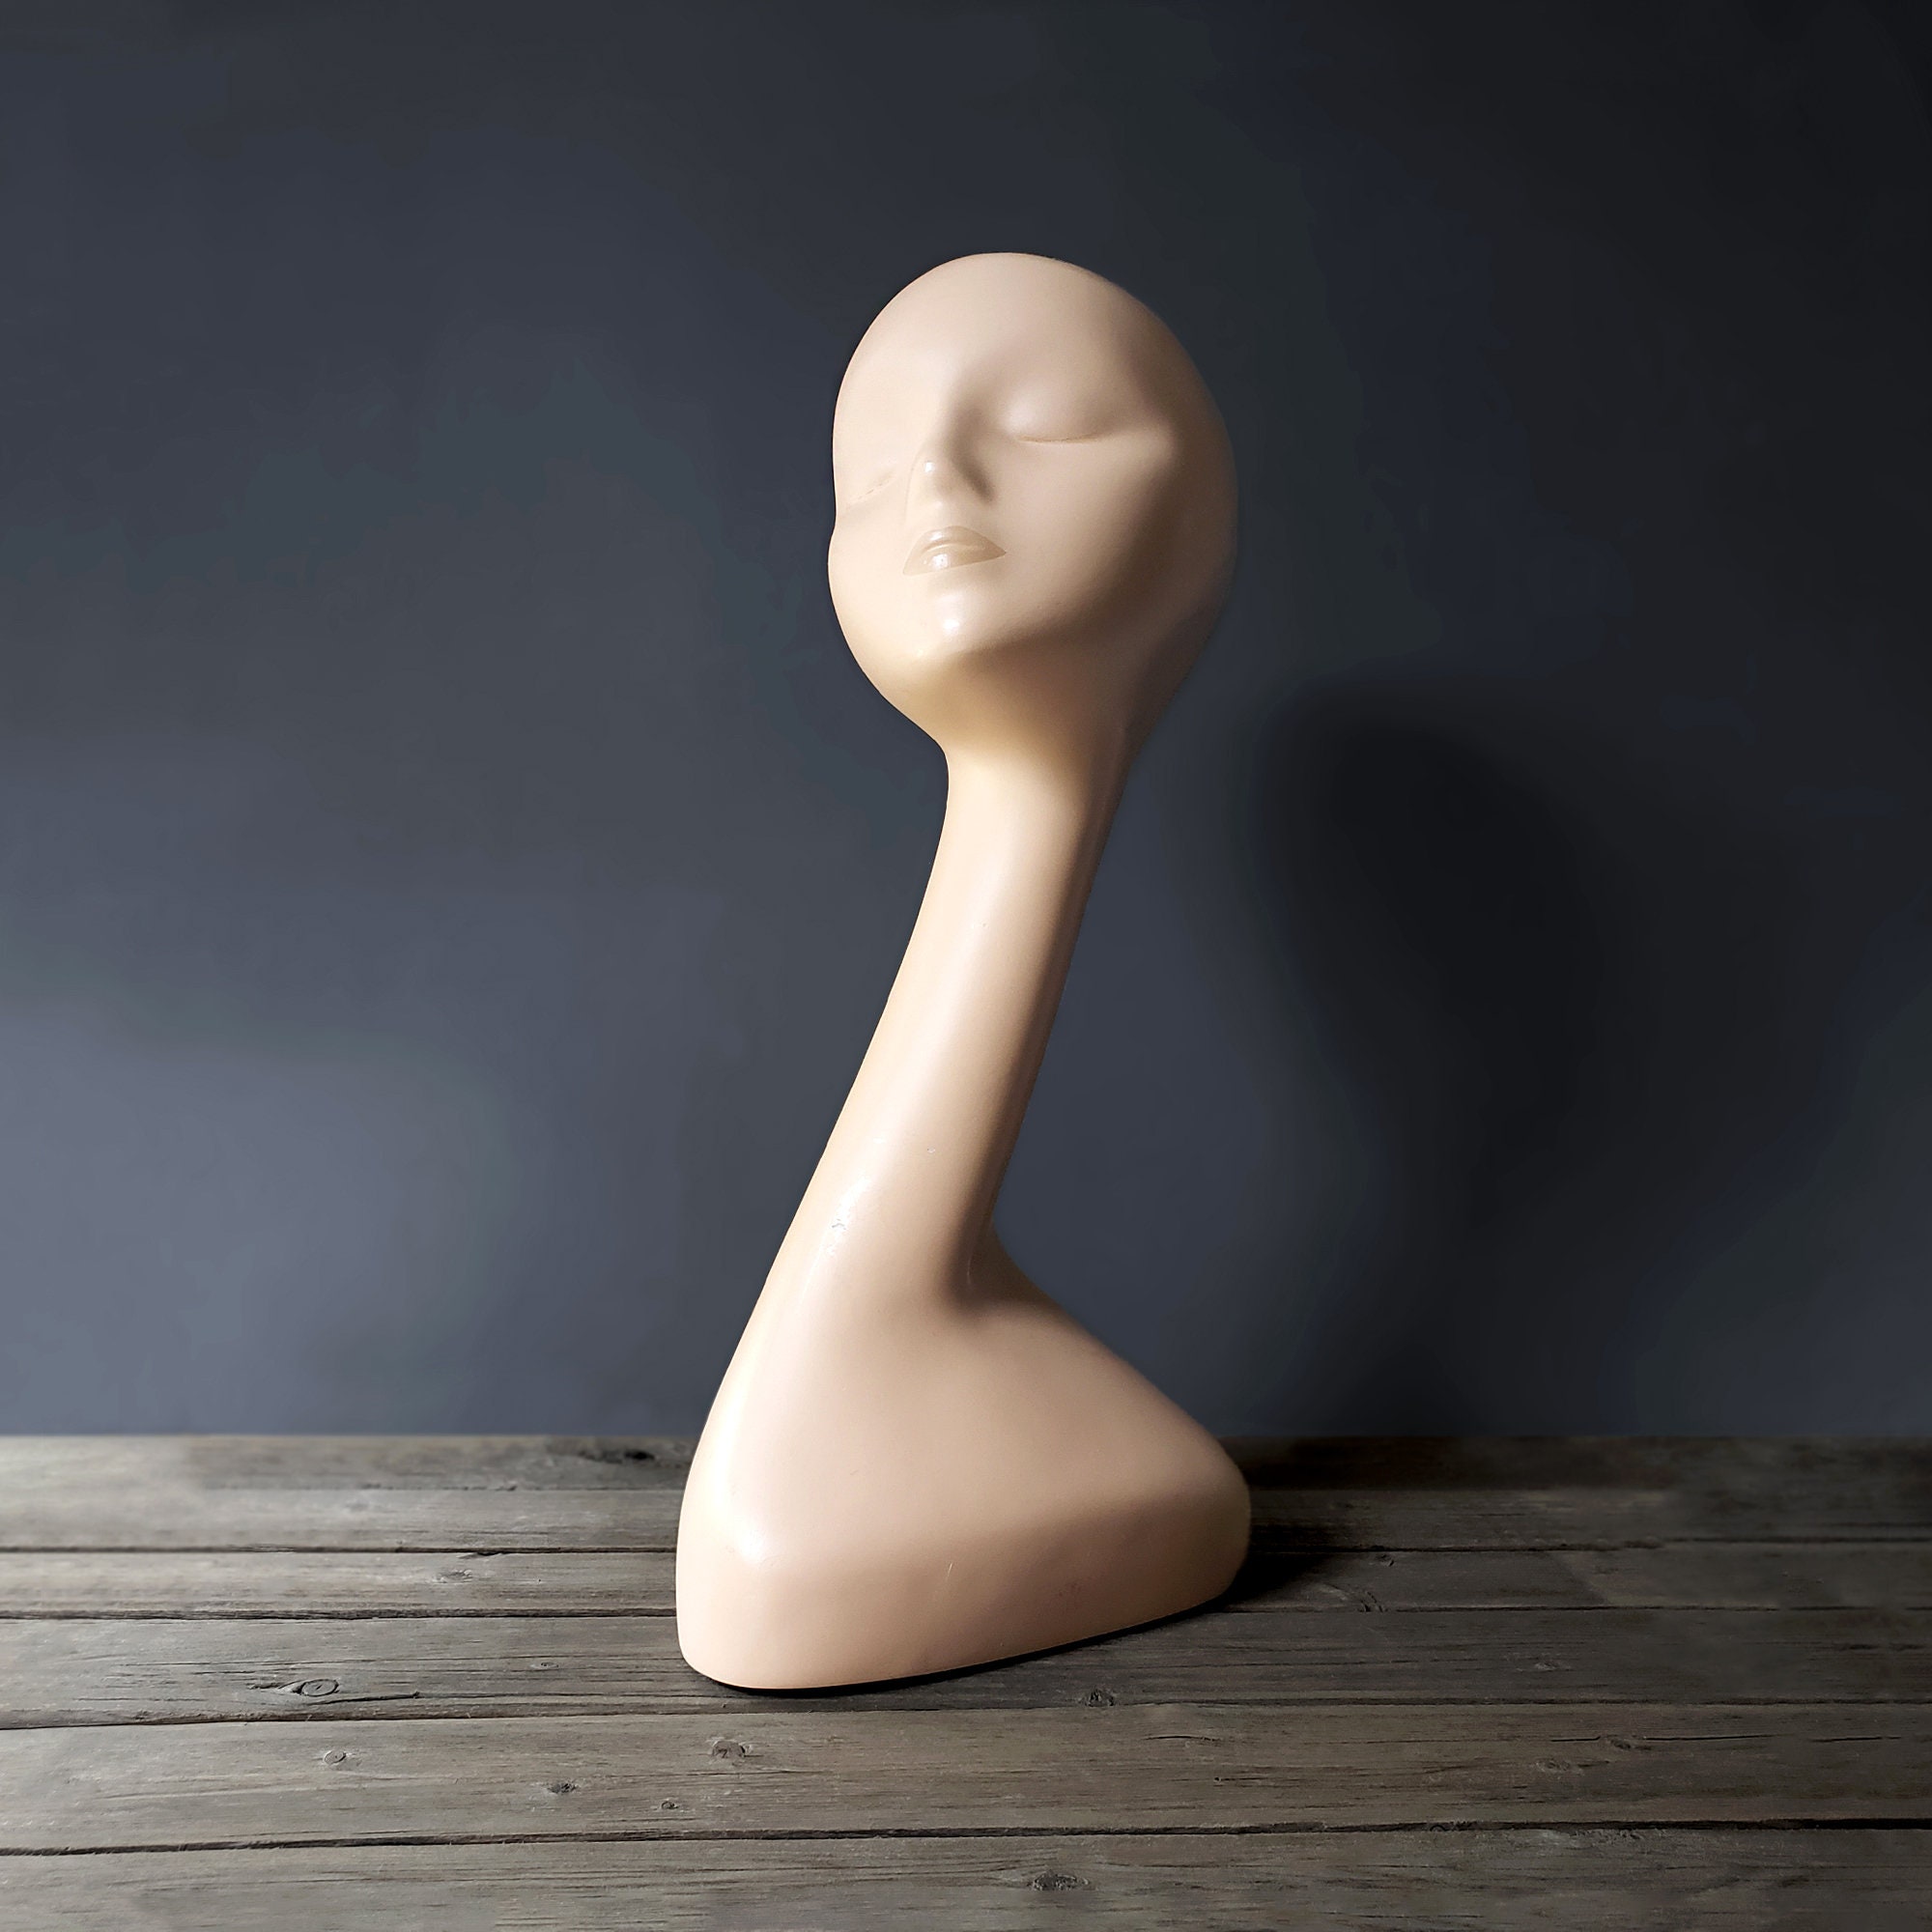 Styrofoam Mannequins Head Form